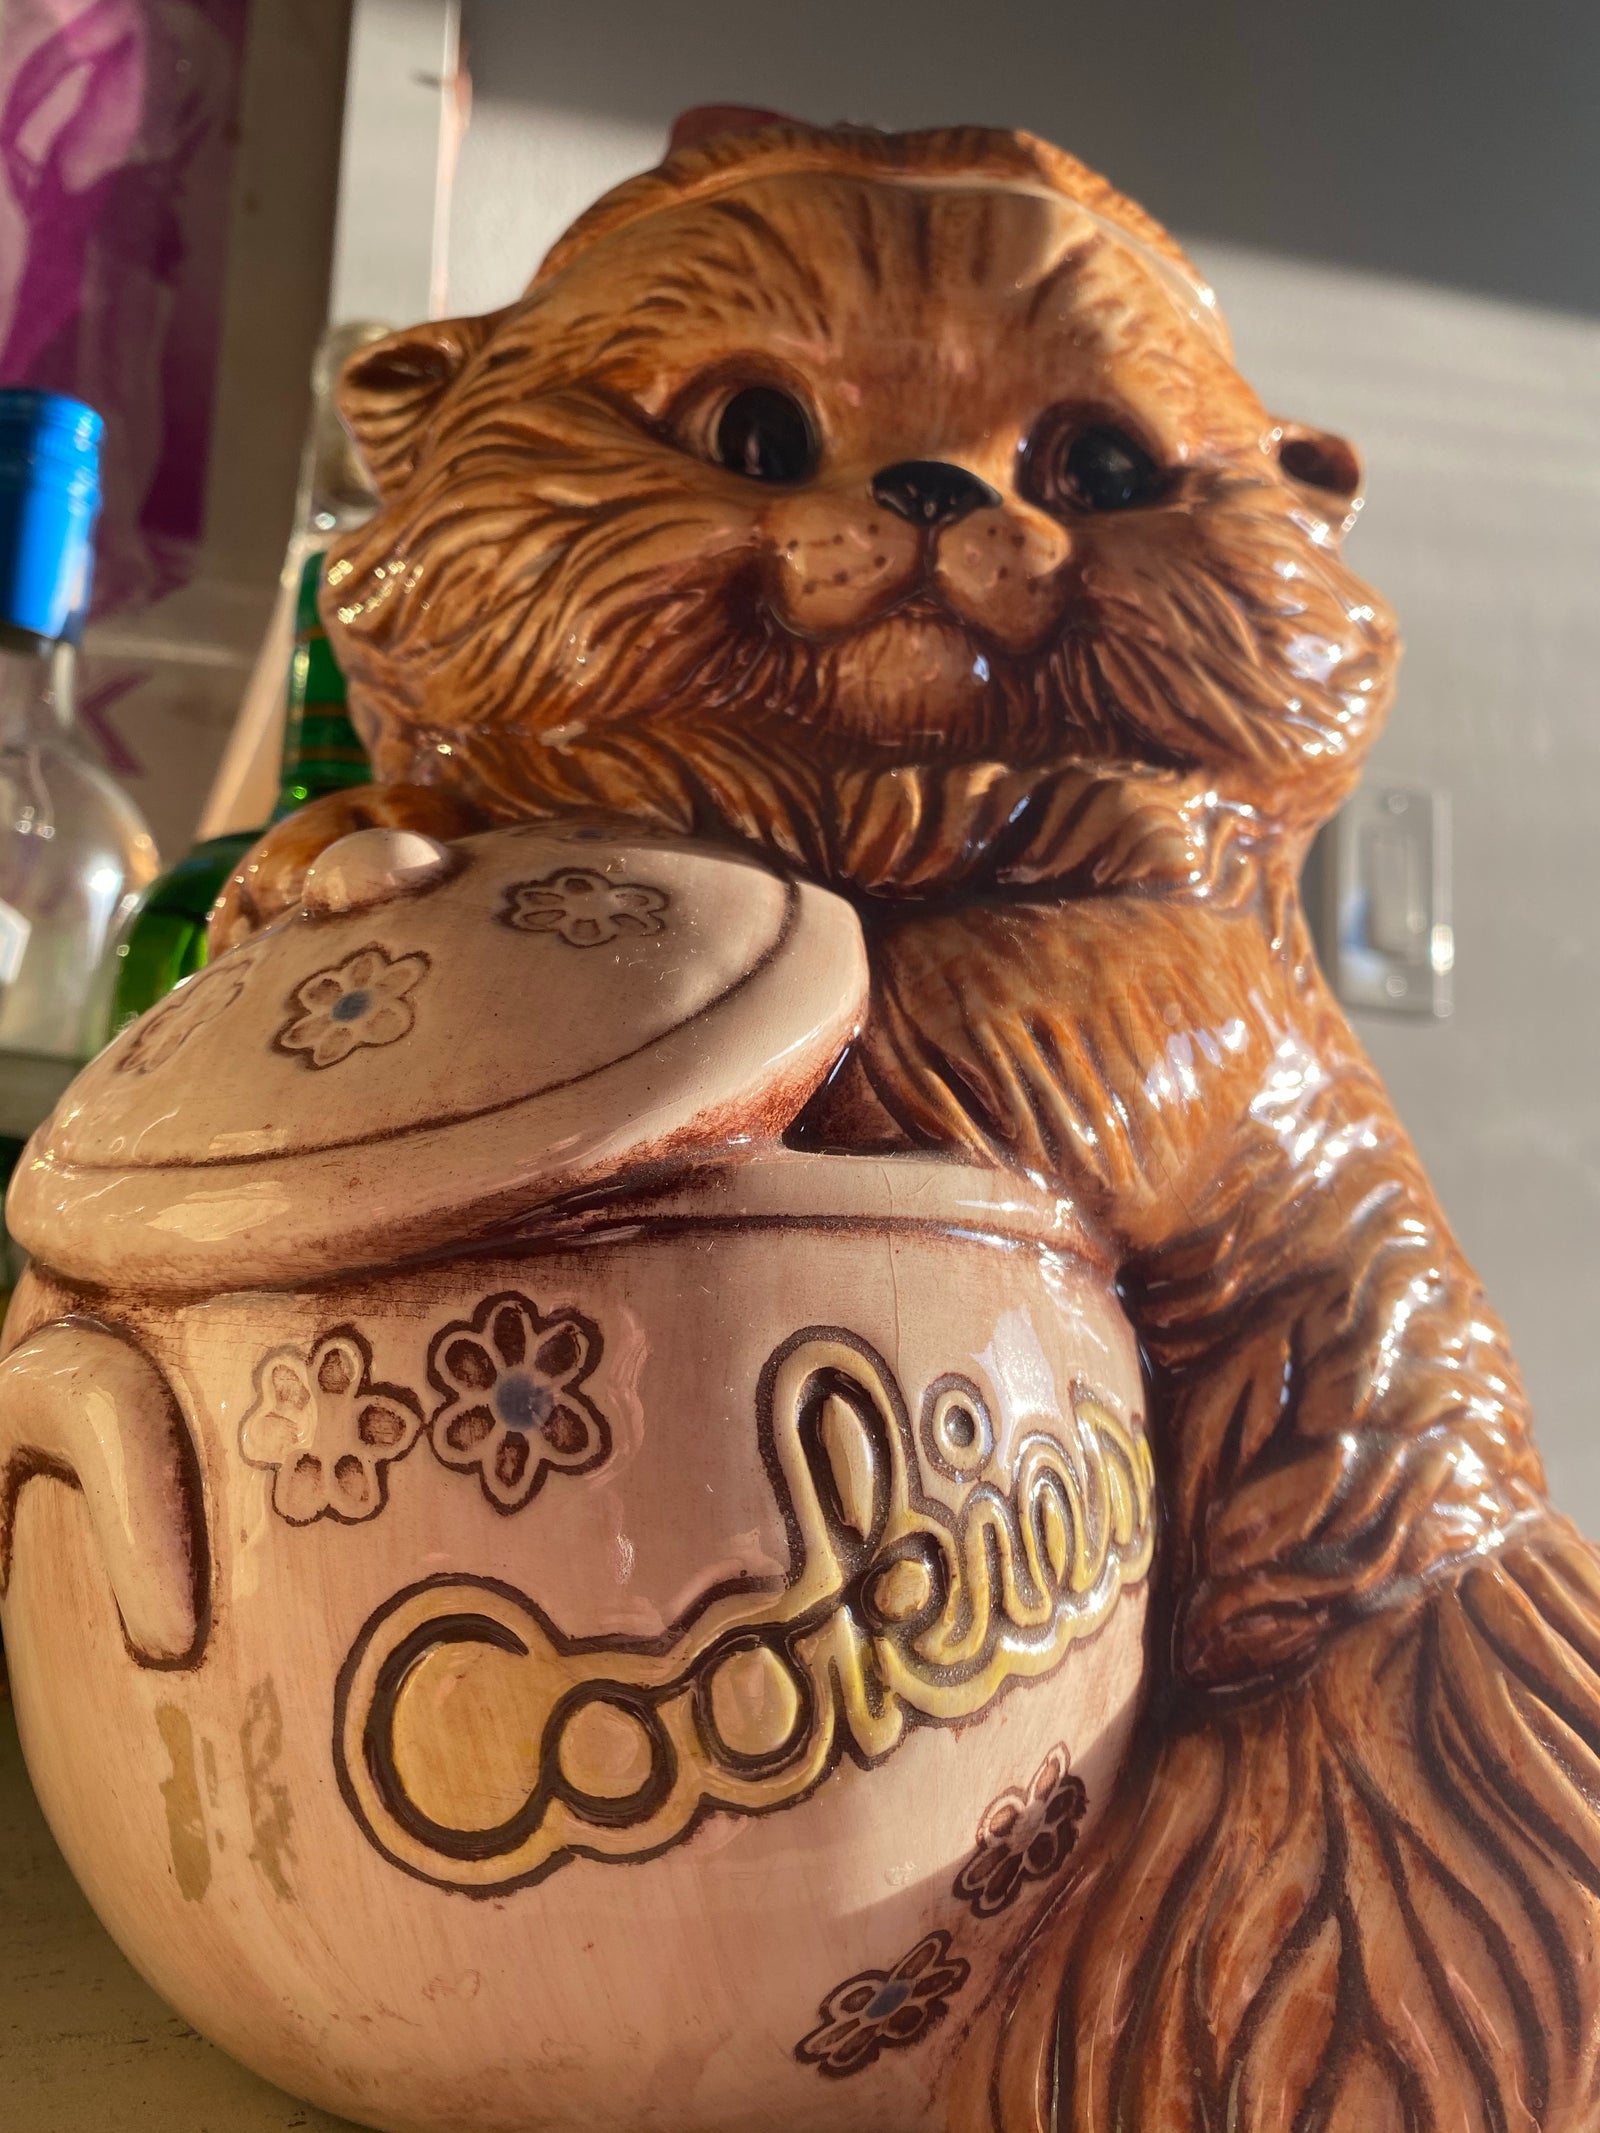 Vintage 1970's Ceramic Kitten Cookie Jar - Local Pickup Only